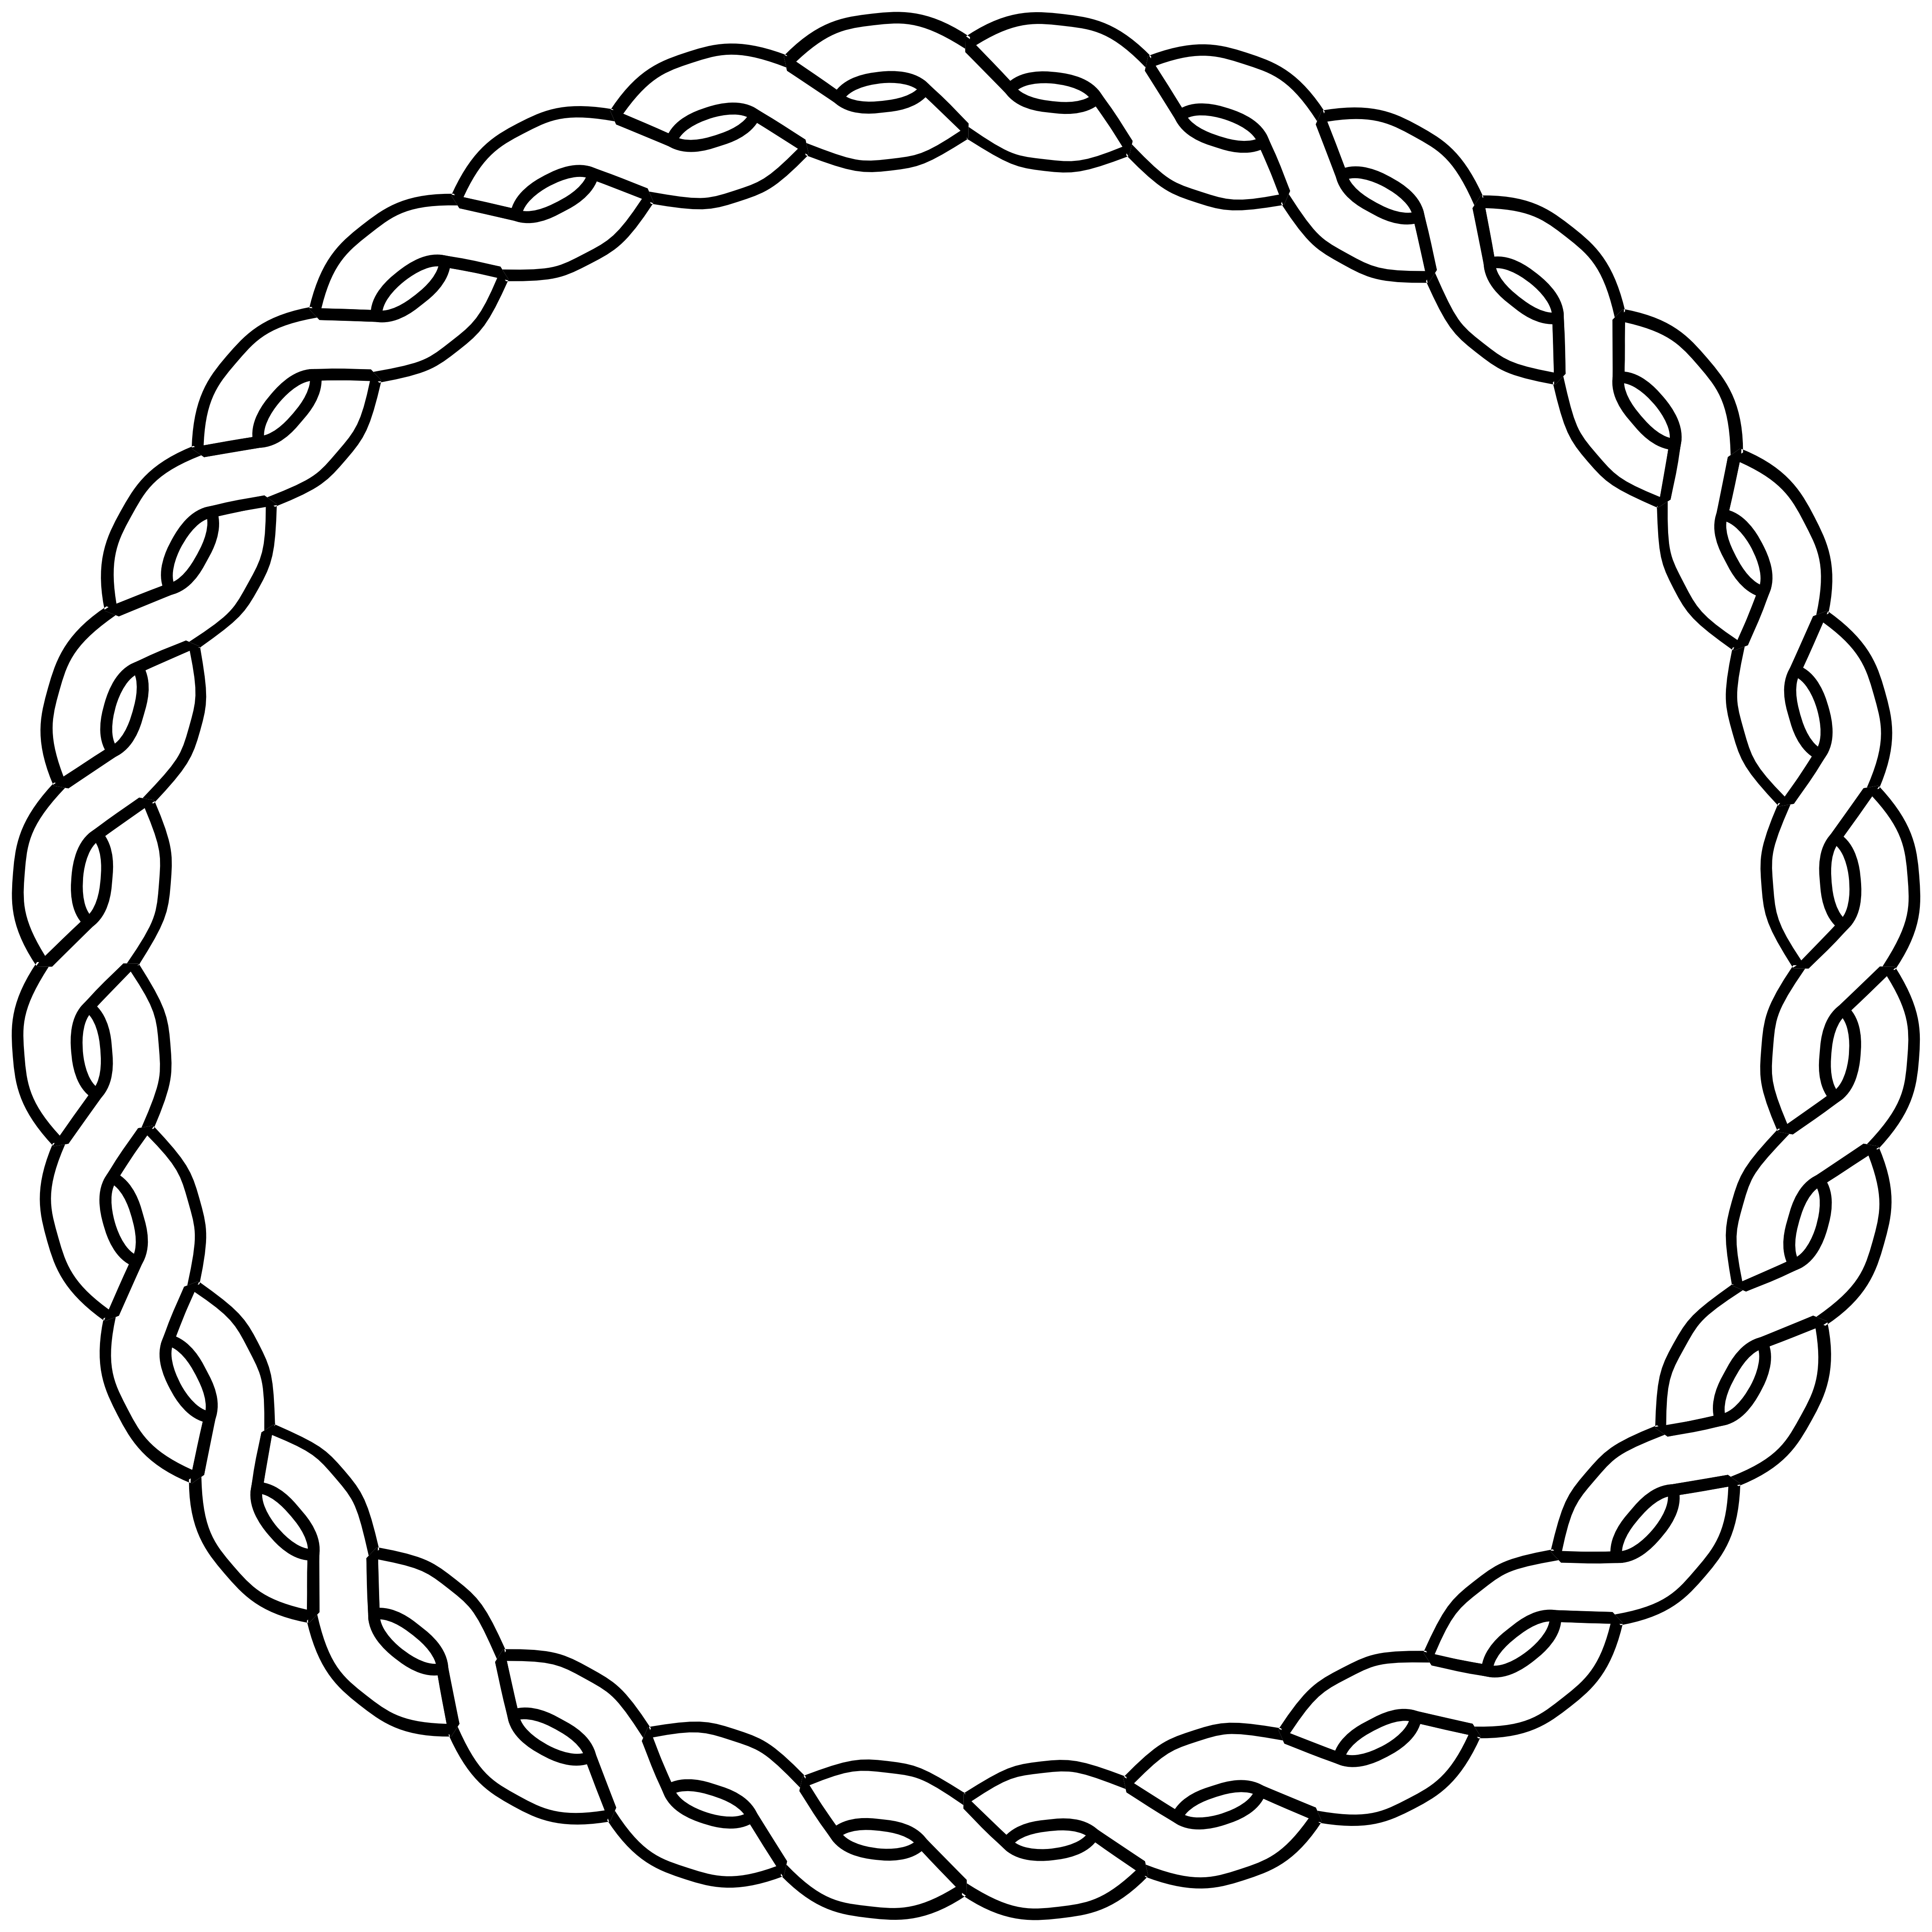 Rope Clipart Black And White Rope Border Circle Dna Black White Line    